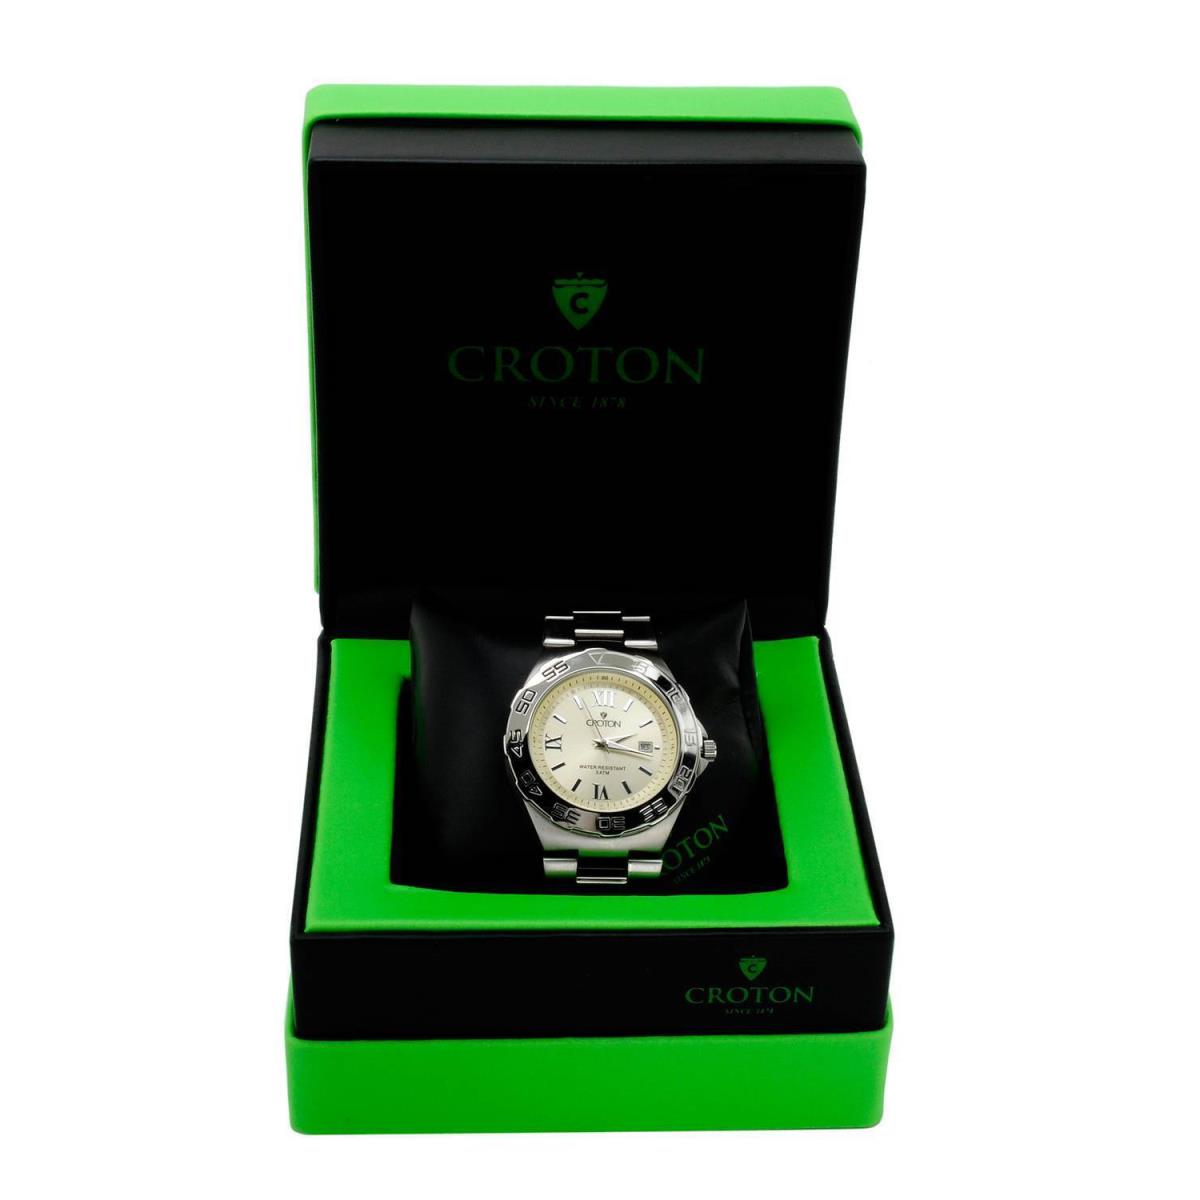 Croton Model CN301217sspa Gentlemens Date Watch